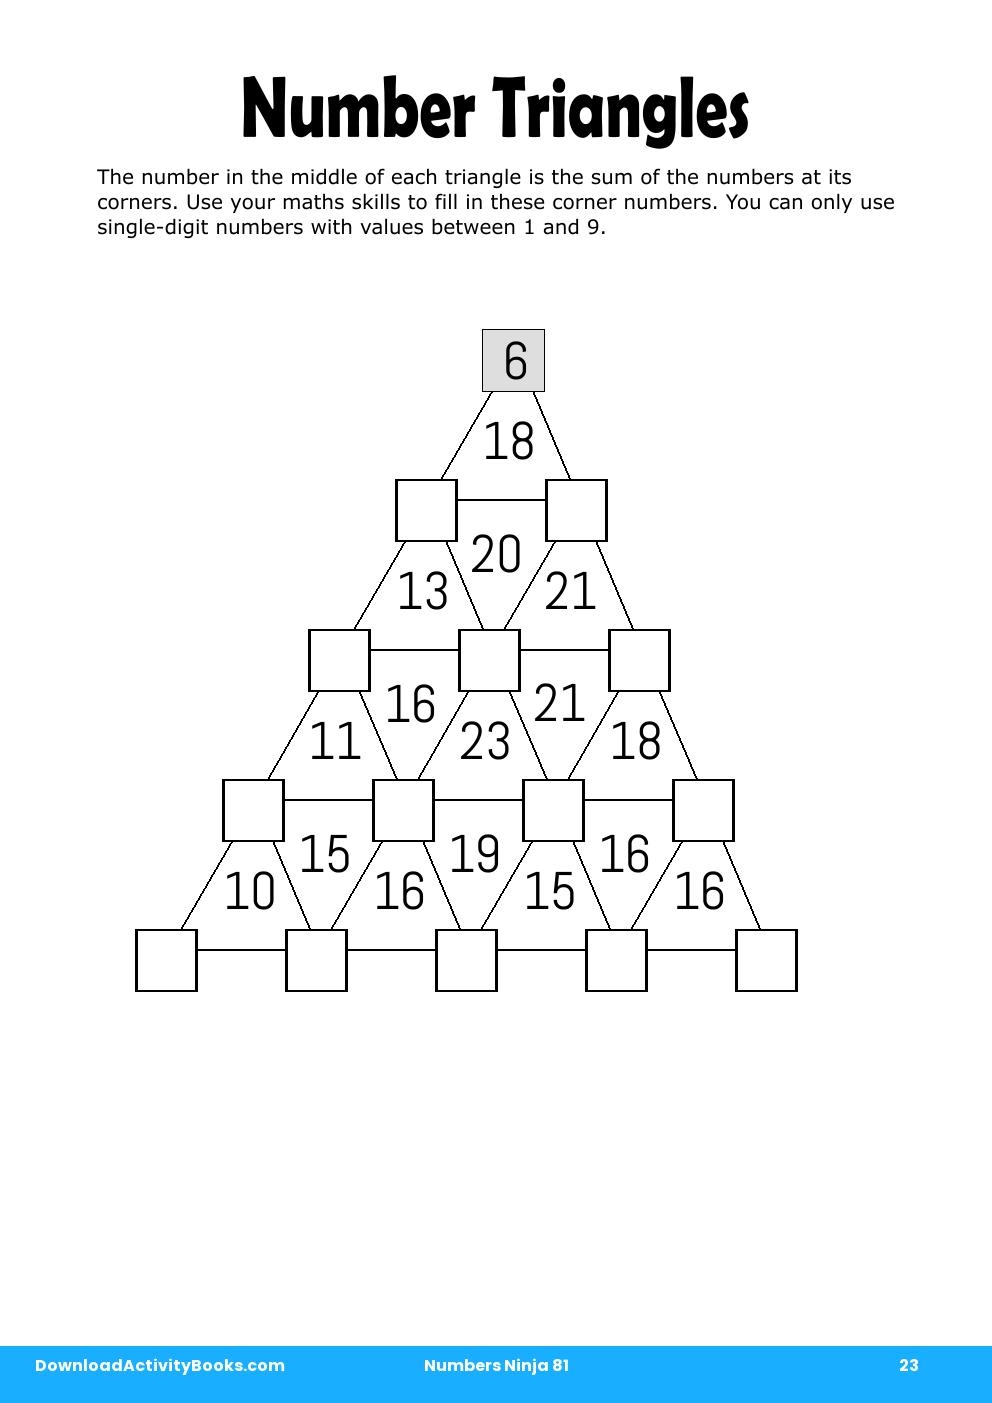 Number Triangles in Numbers Ninja 81